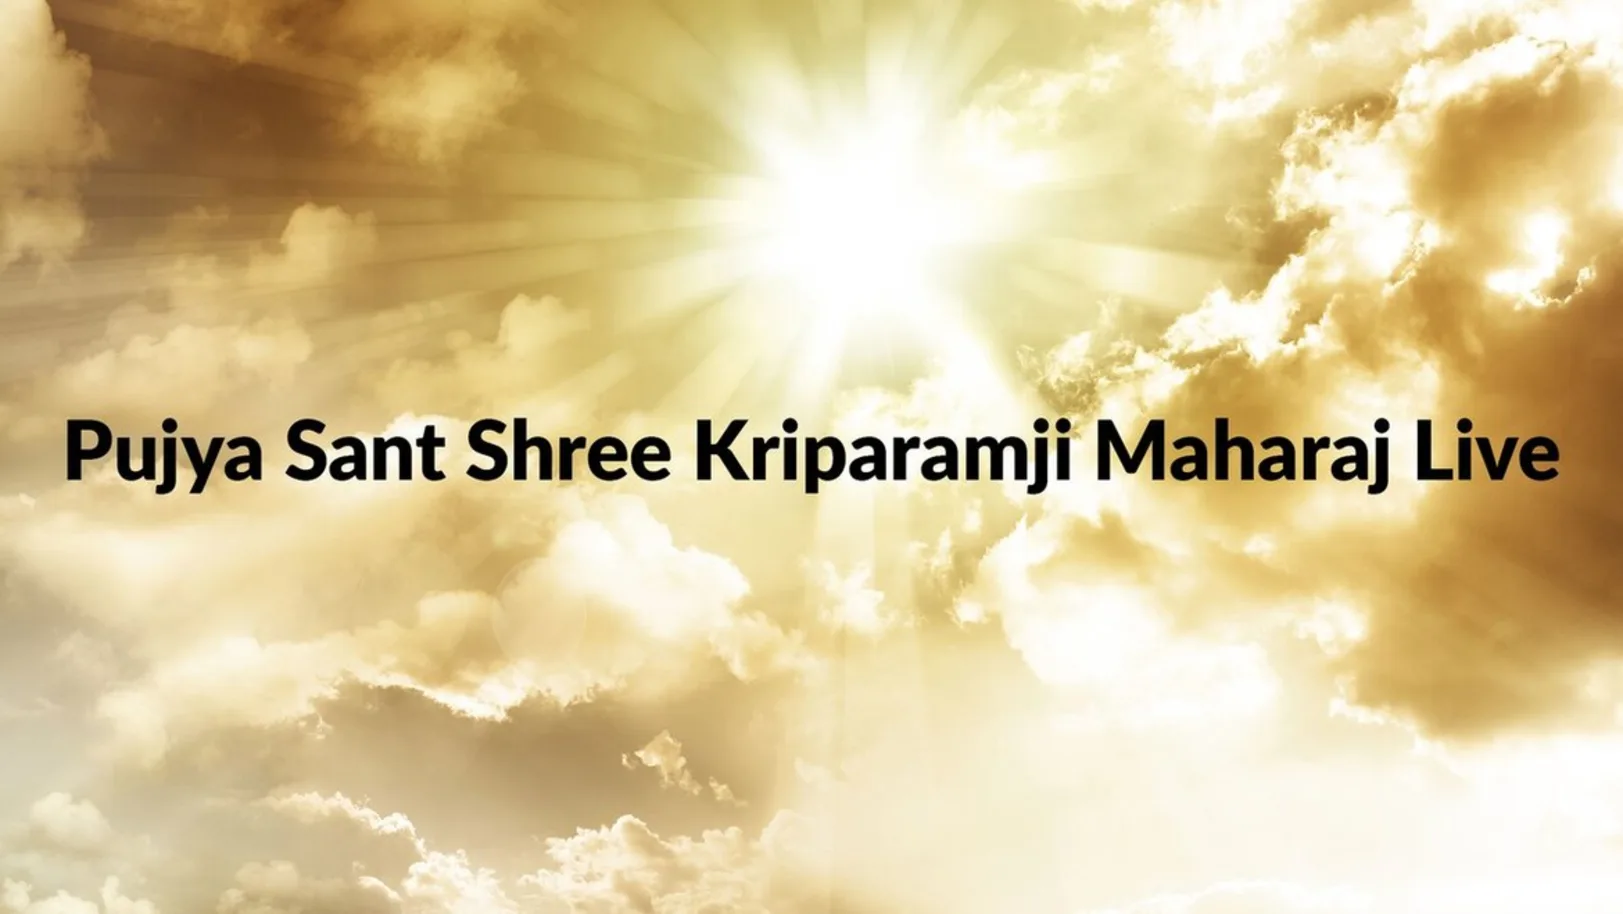 Pujya Sant Shree Kriparamji Maharaj Live Streaming Now On Aastha Bhajan